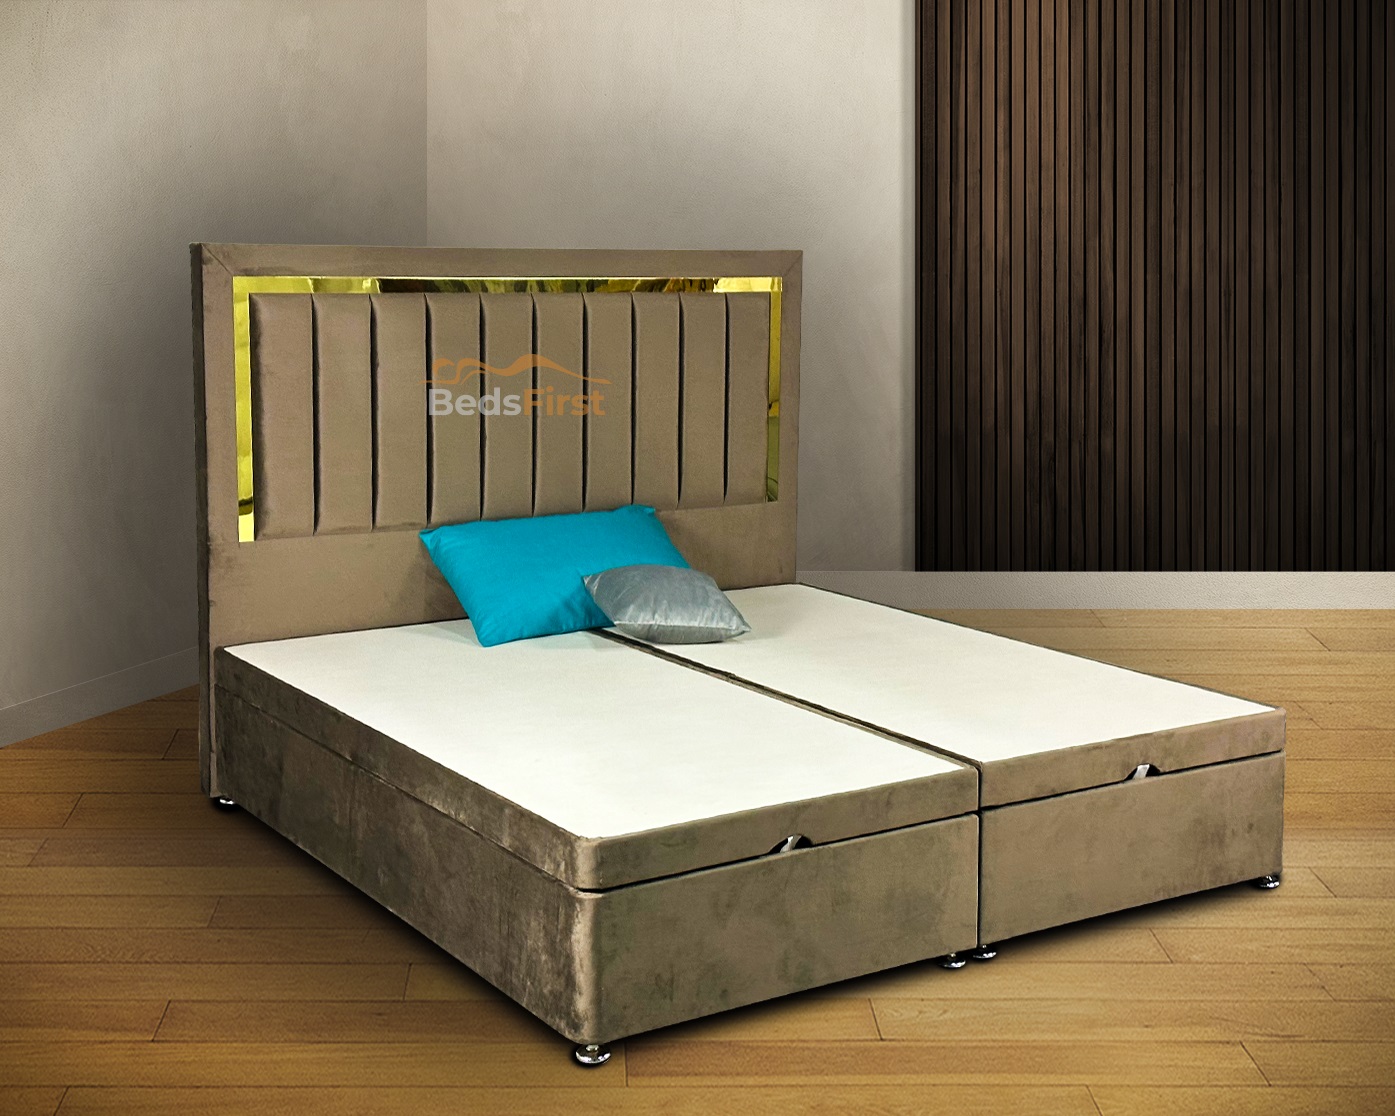 Cubex Bed